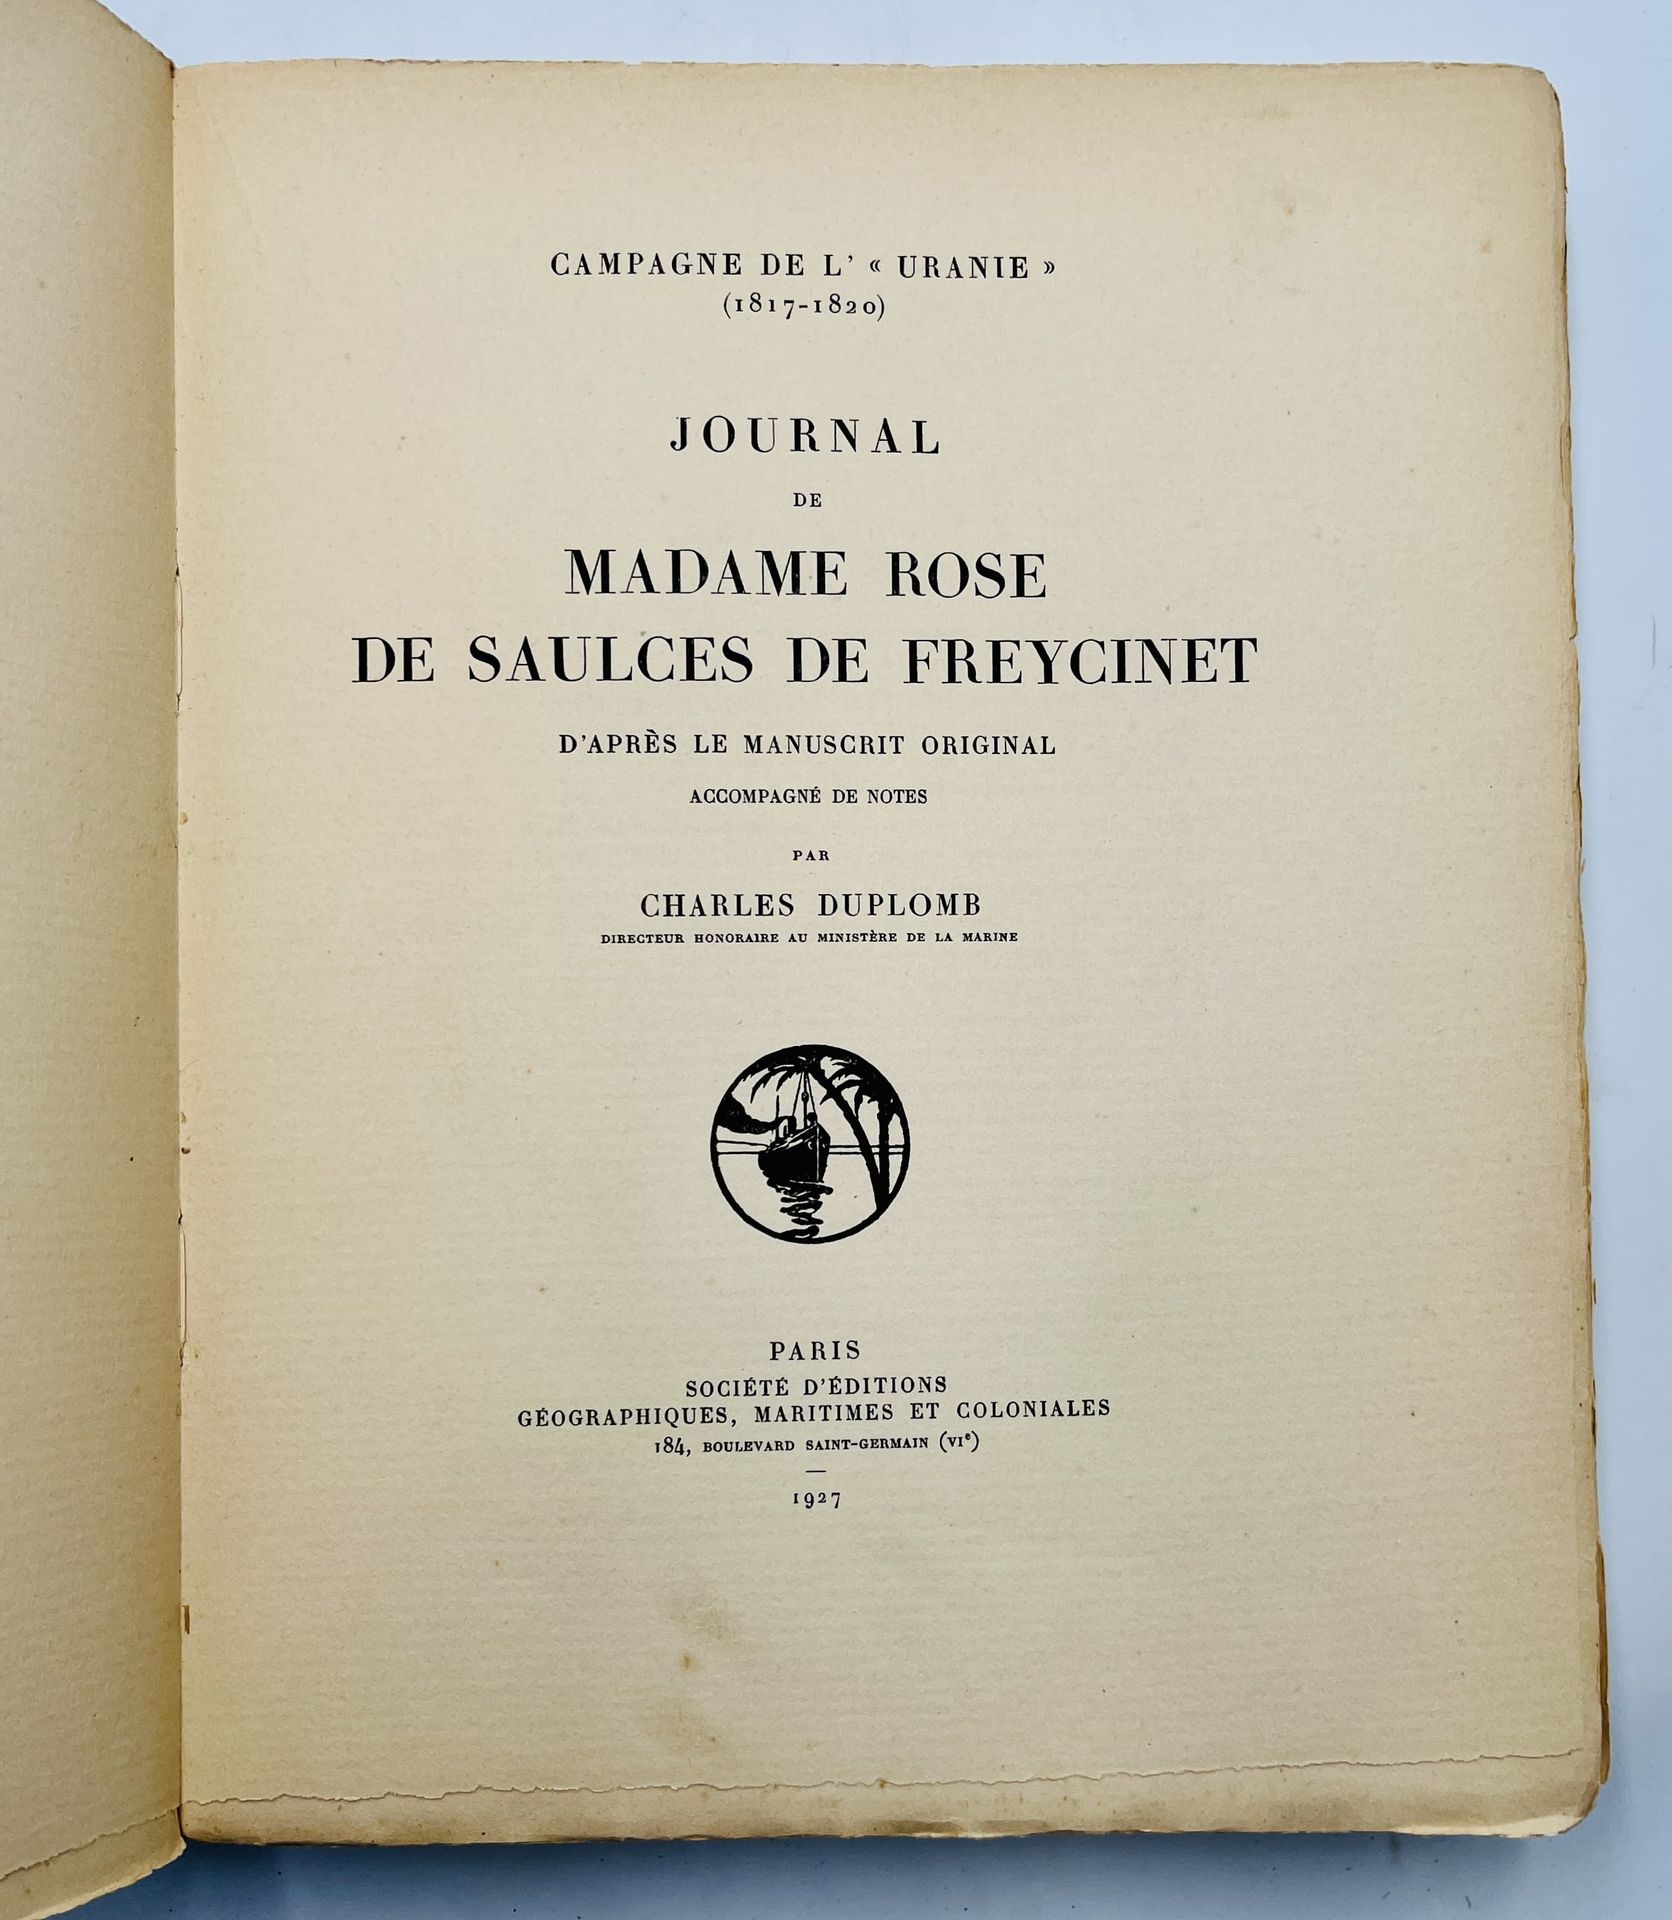 FREYCINET, Rose de Saulces de Kampagne der Uranie (1817-1820) nach dem Originalm&hellip;